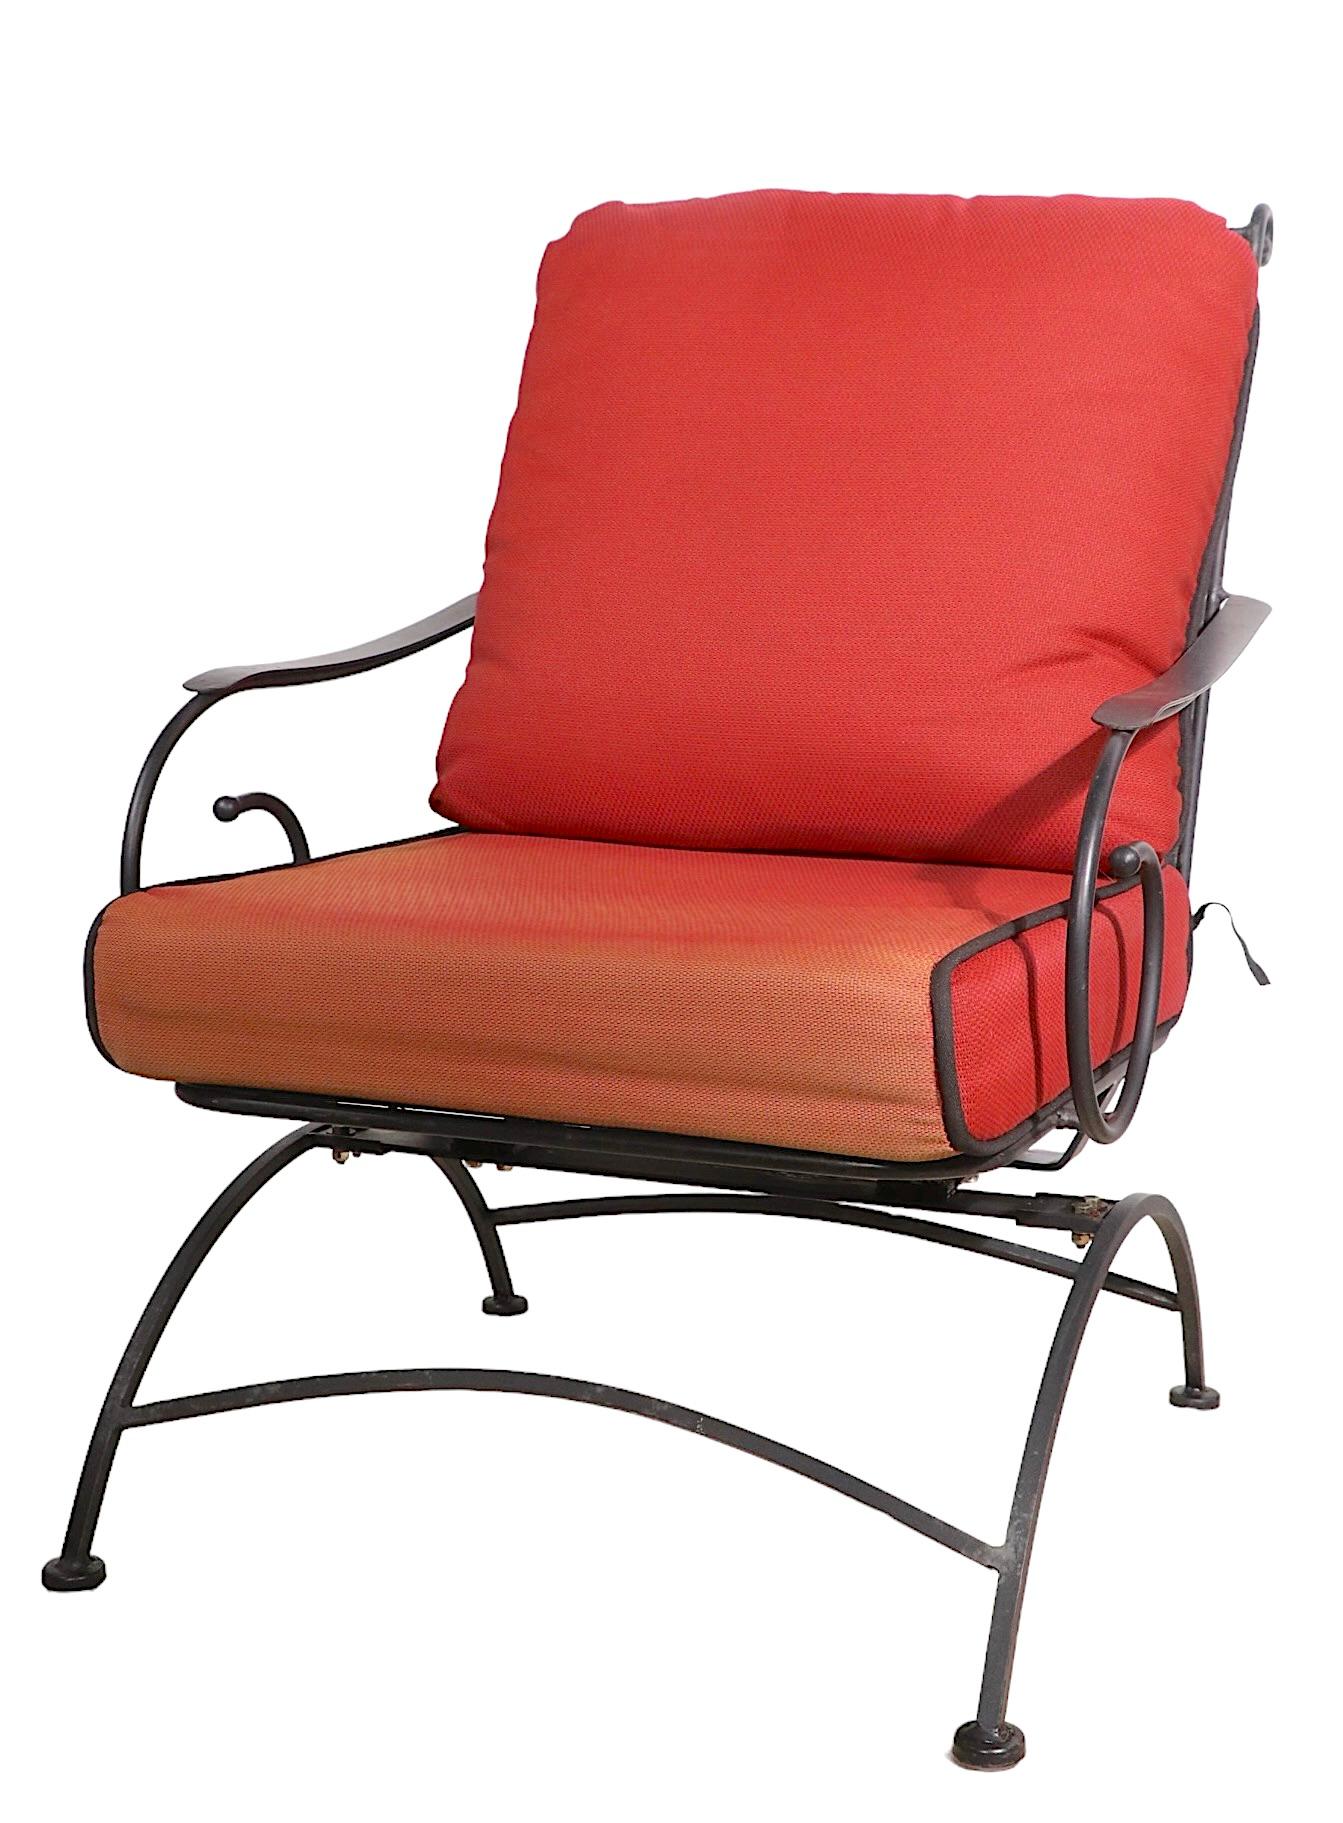 Pr. Wrought Iron Platform Rocking Chairs att. to Woodard c. 1970/1980's For Sale 2